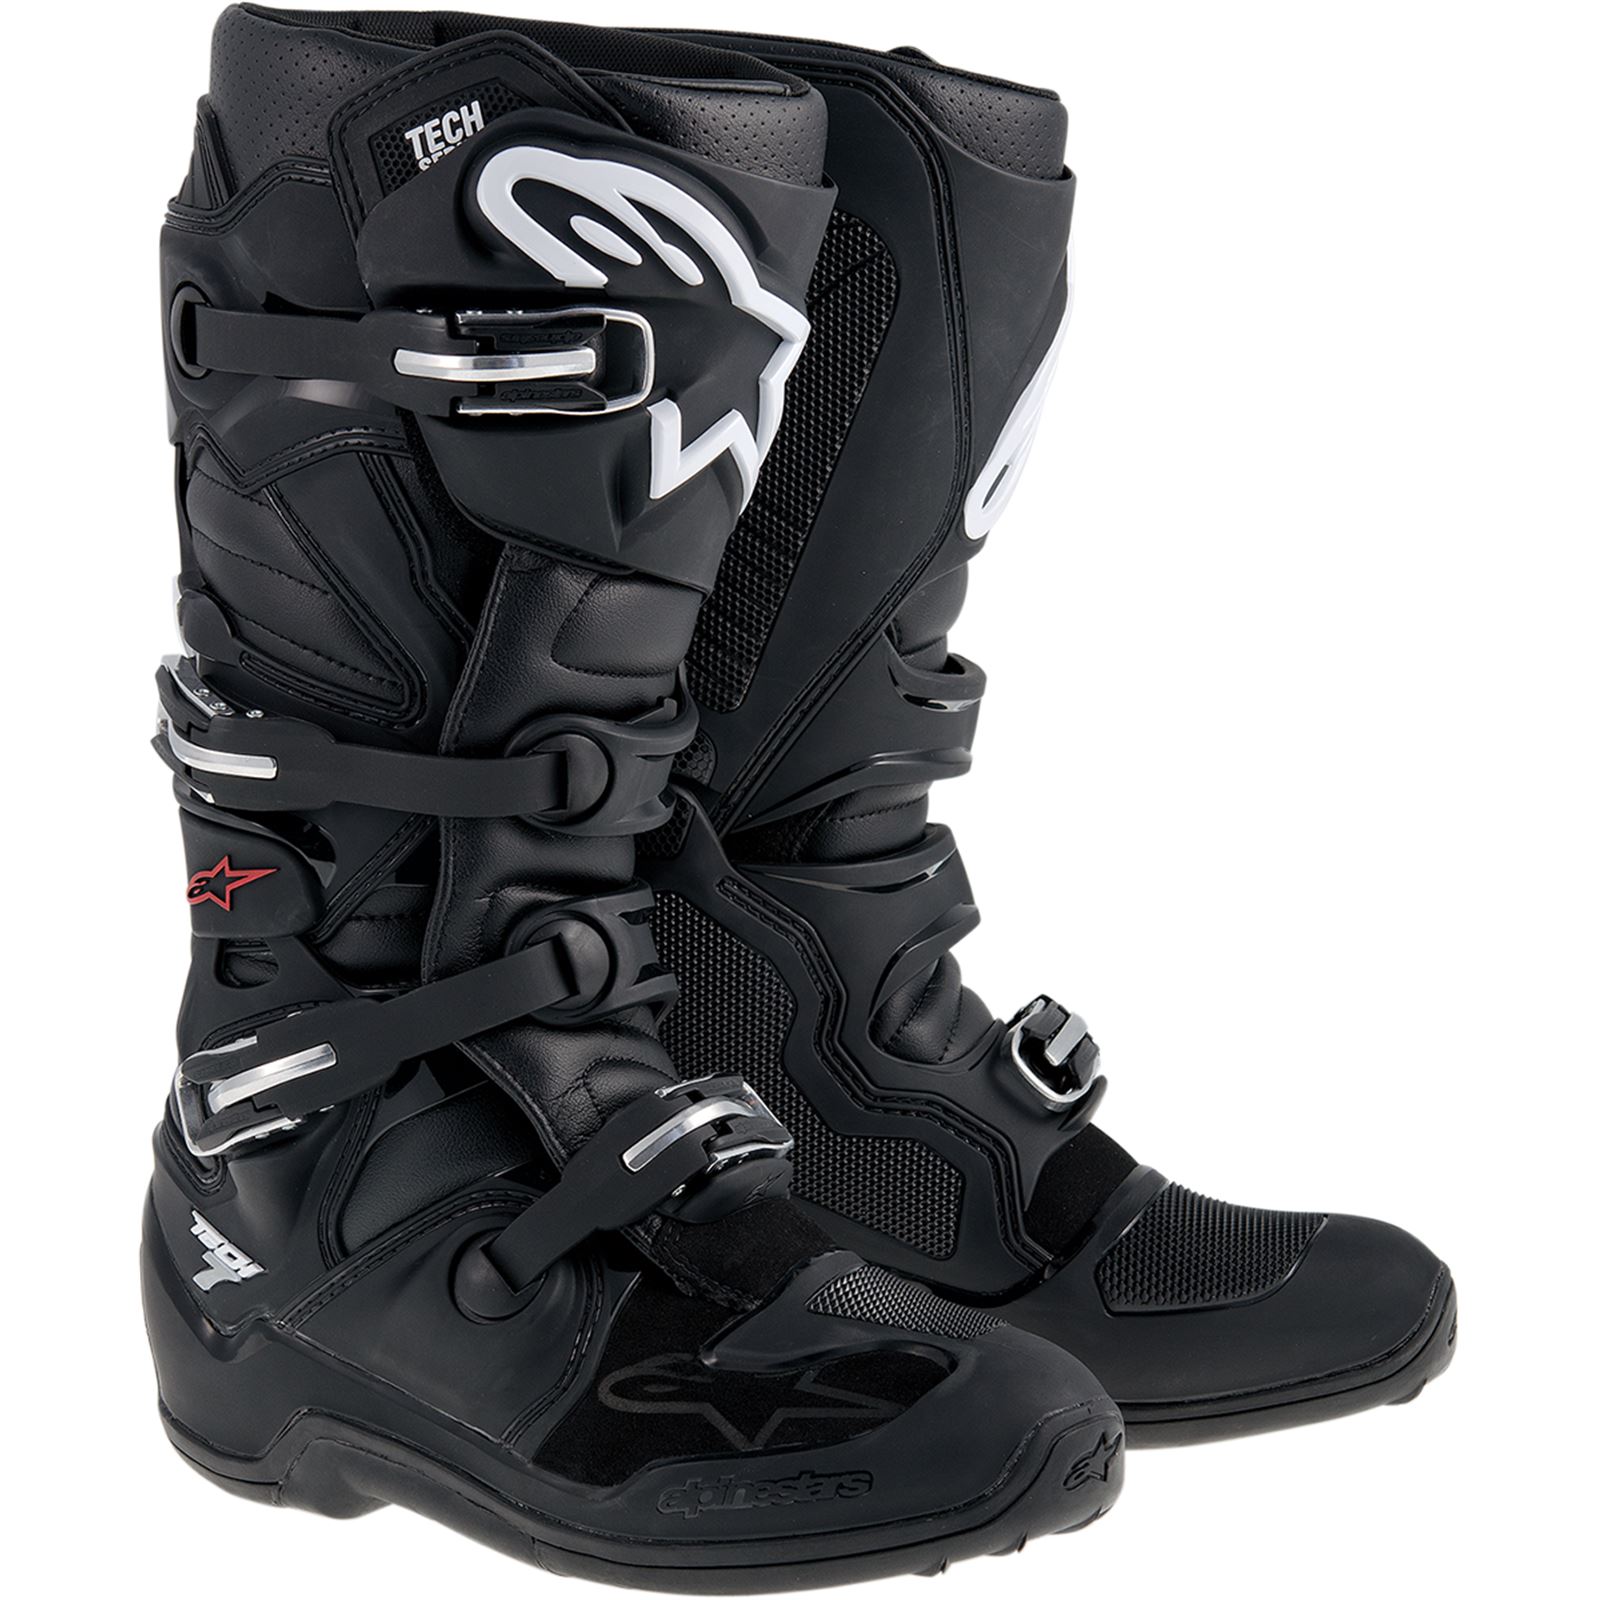 Alpinestars Tech 7 Boots - Black - Size 13